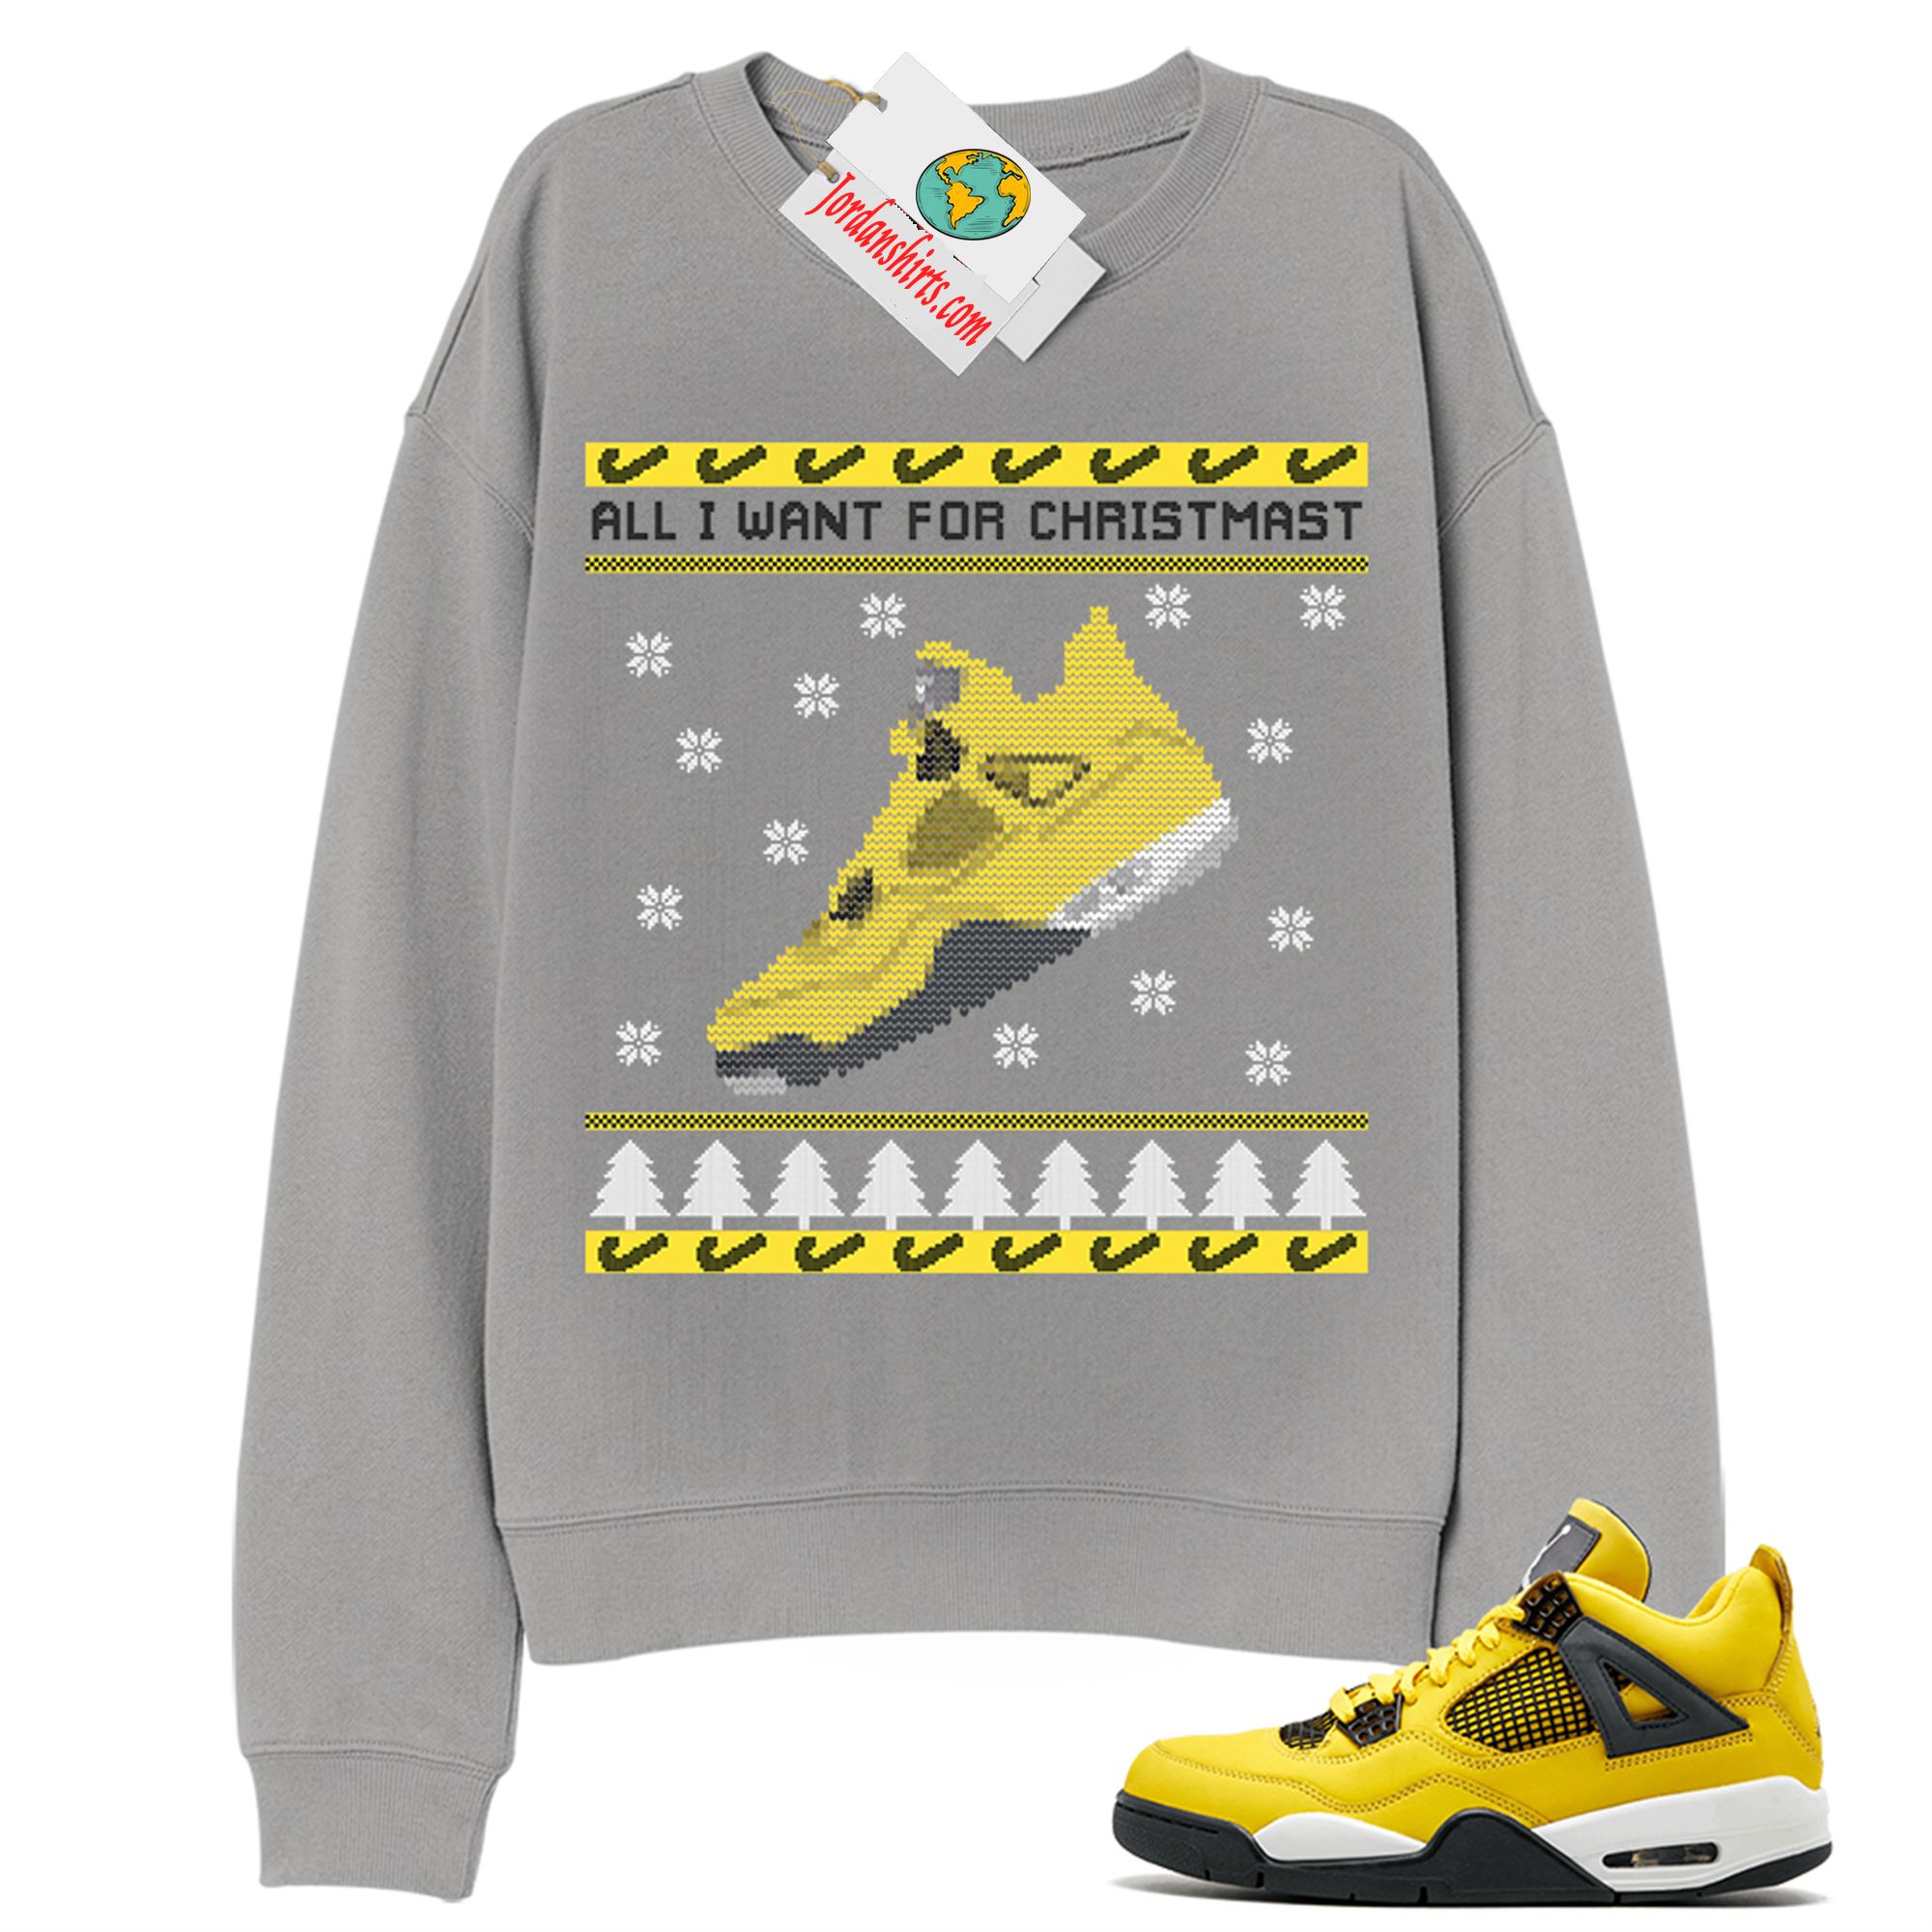 Jordan 4 Sweatshirt, Sneaker Ugly Christmas Shirt Grey Sweatshirt Air Jordan 4 Tour Yellow Lightning 4s Plus Size Up To 5xl